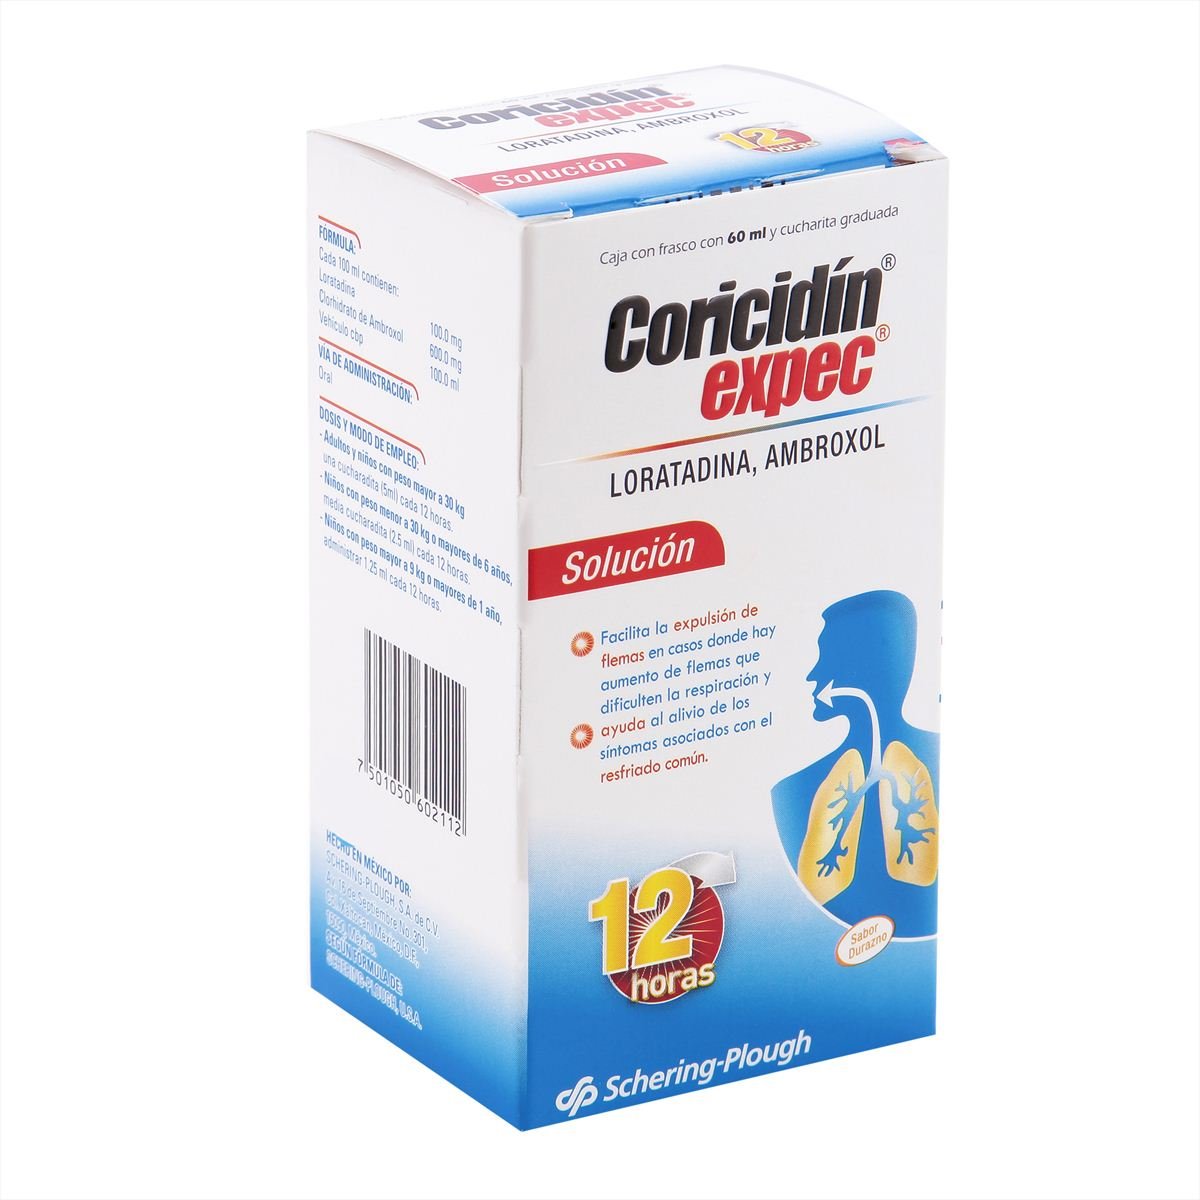 Coricidin expec jarabe 60 ml